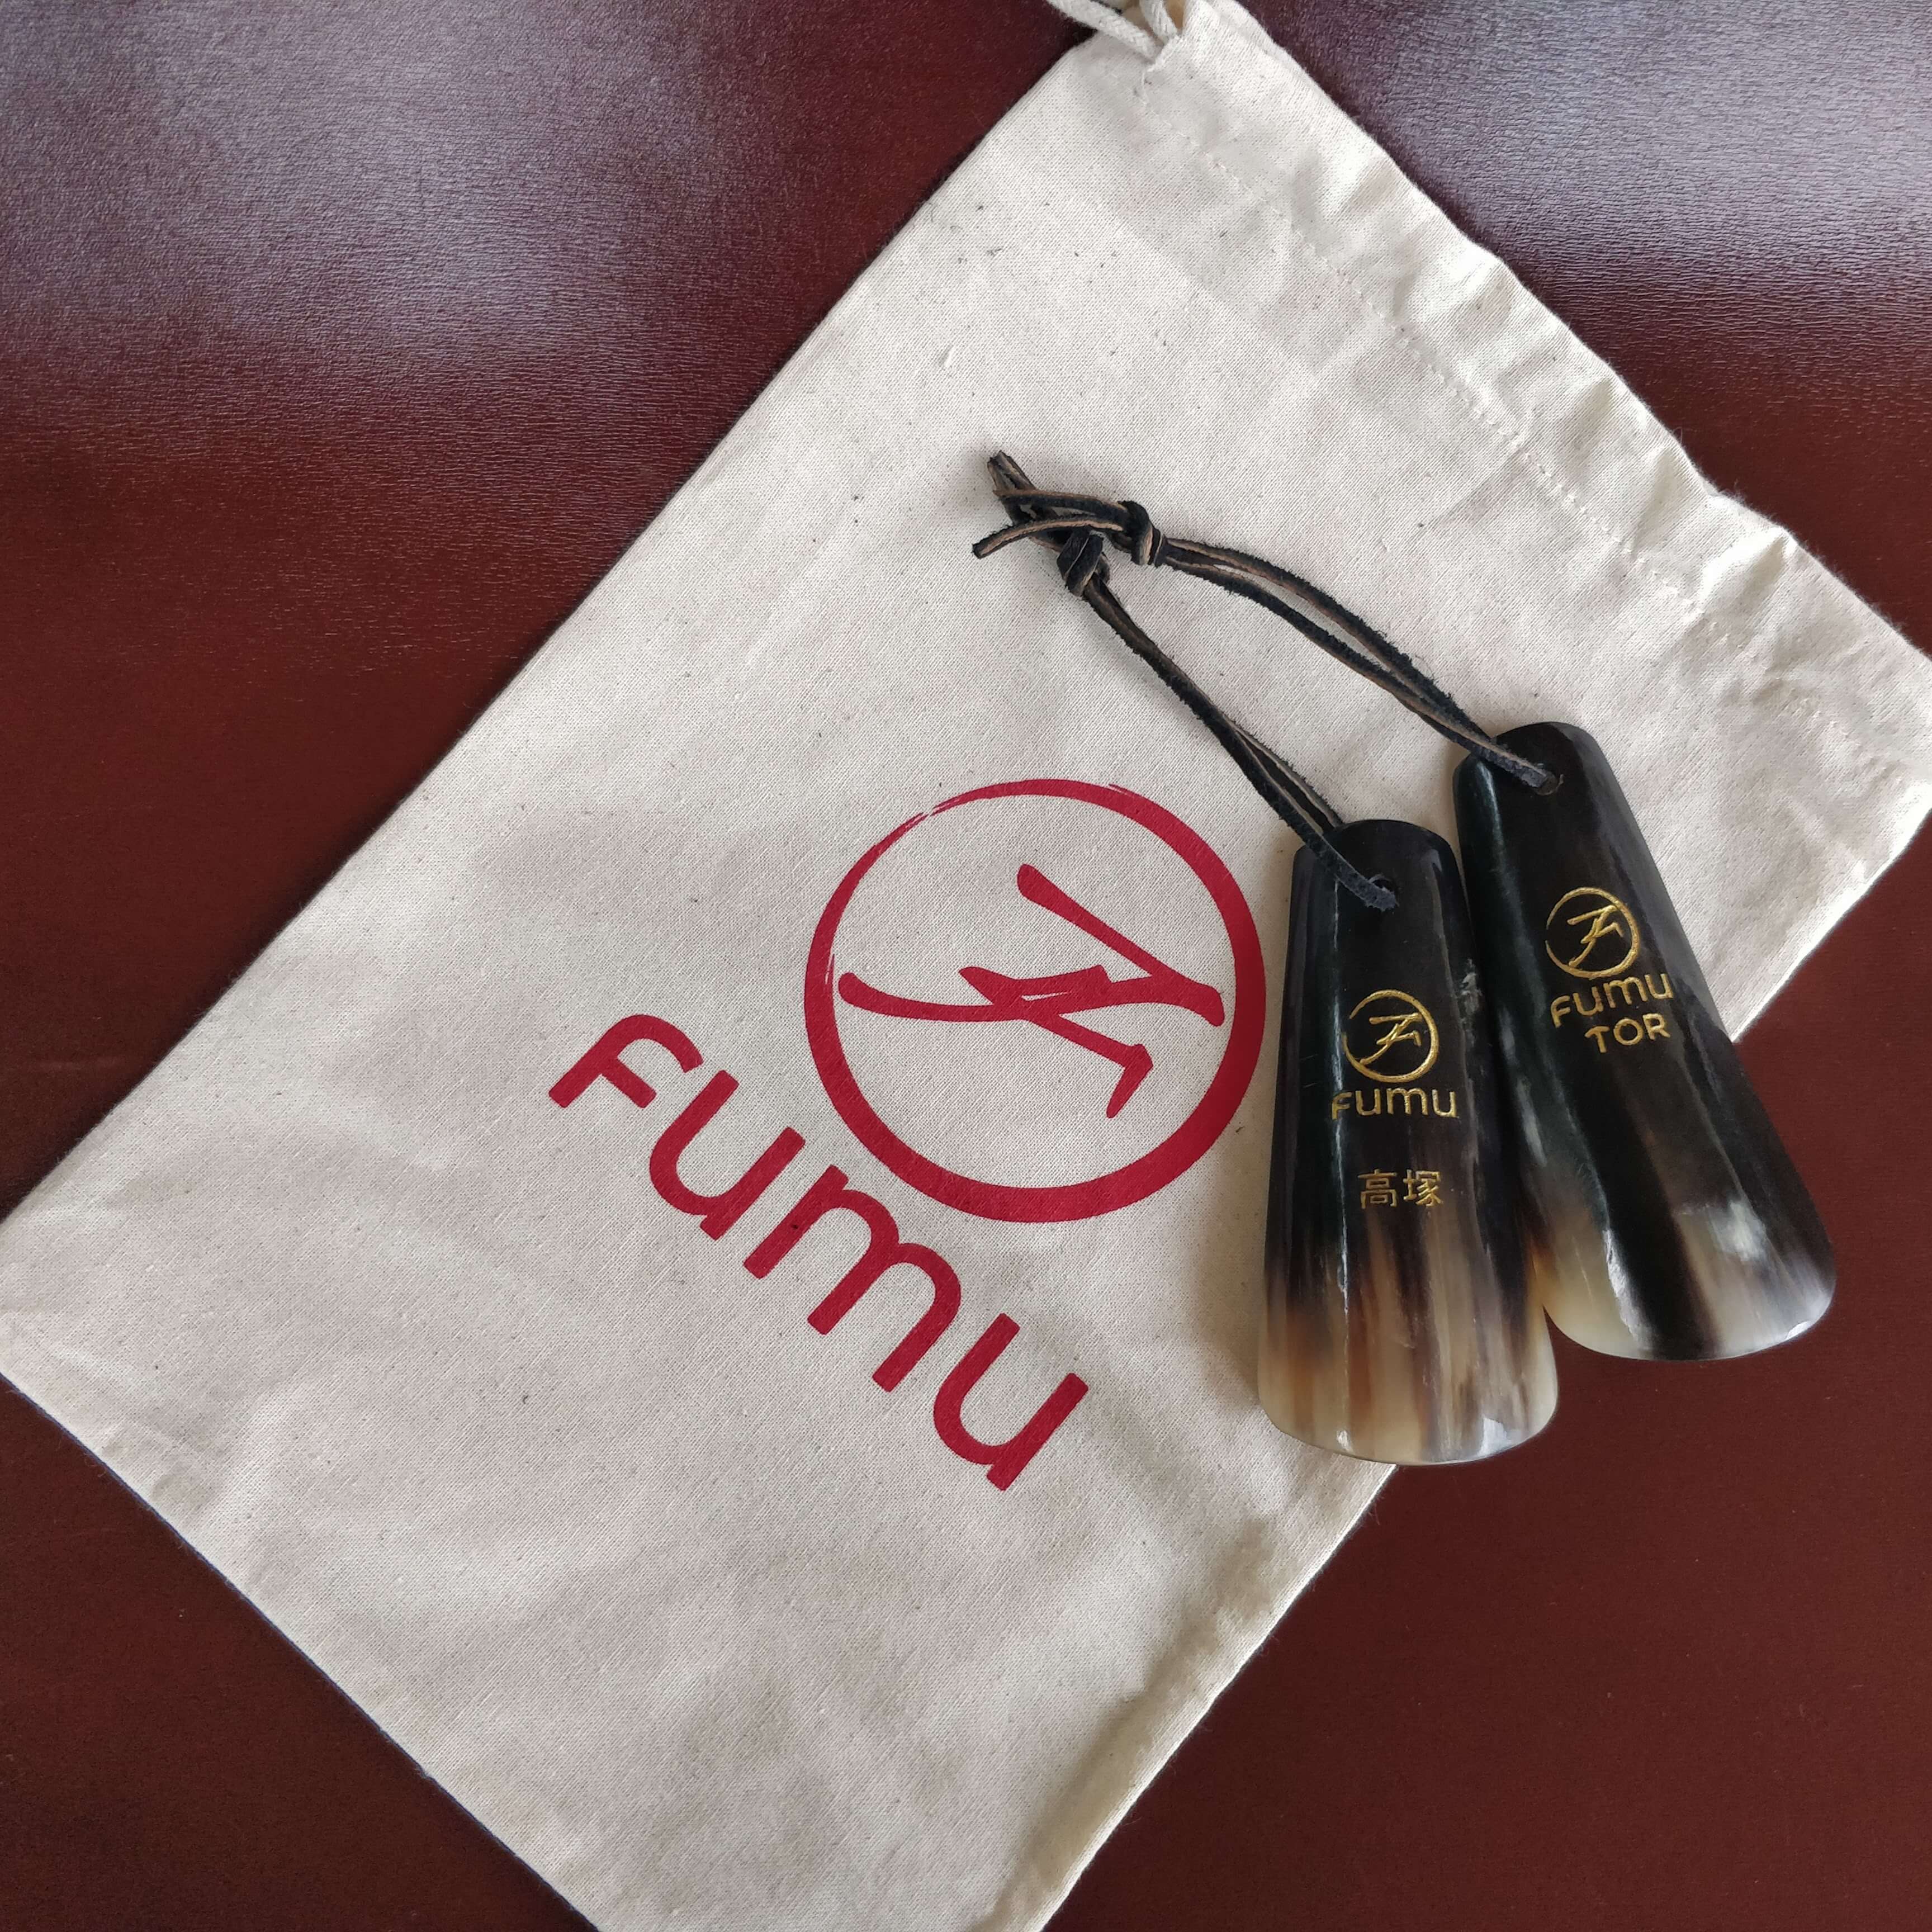 Fumu Singapore: Pocket Shoe Horn